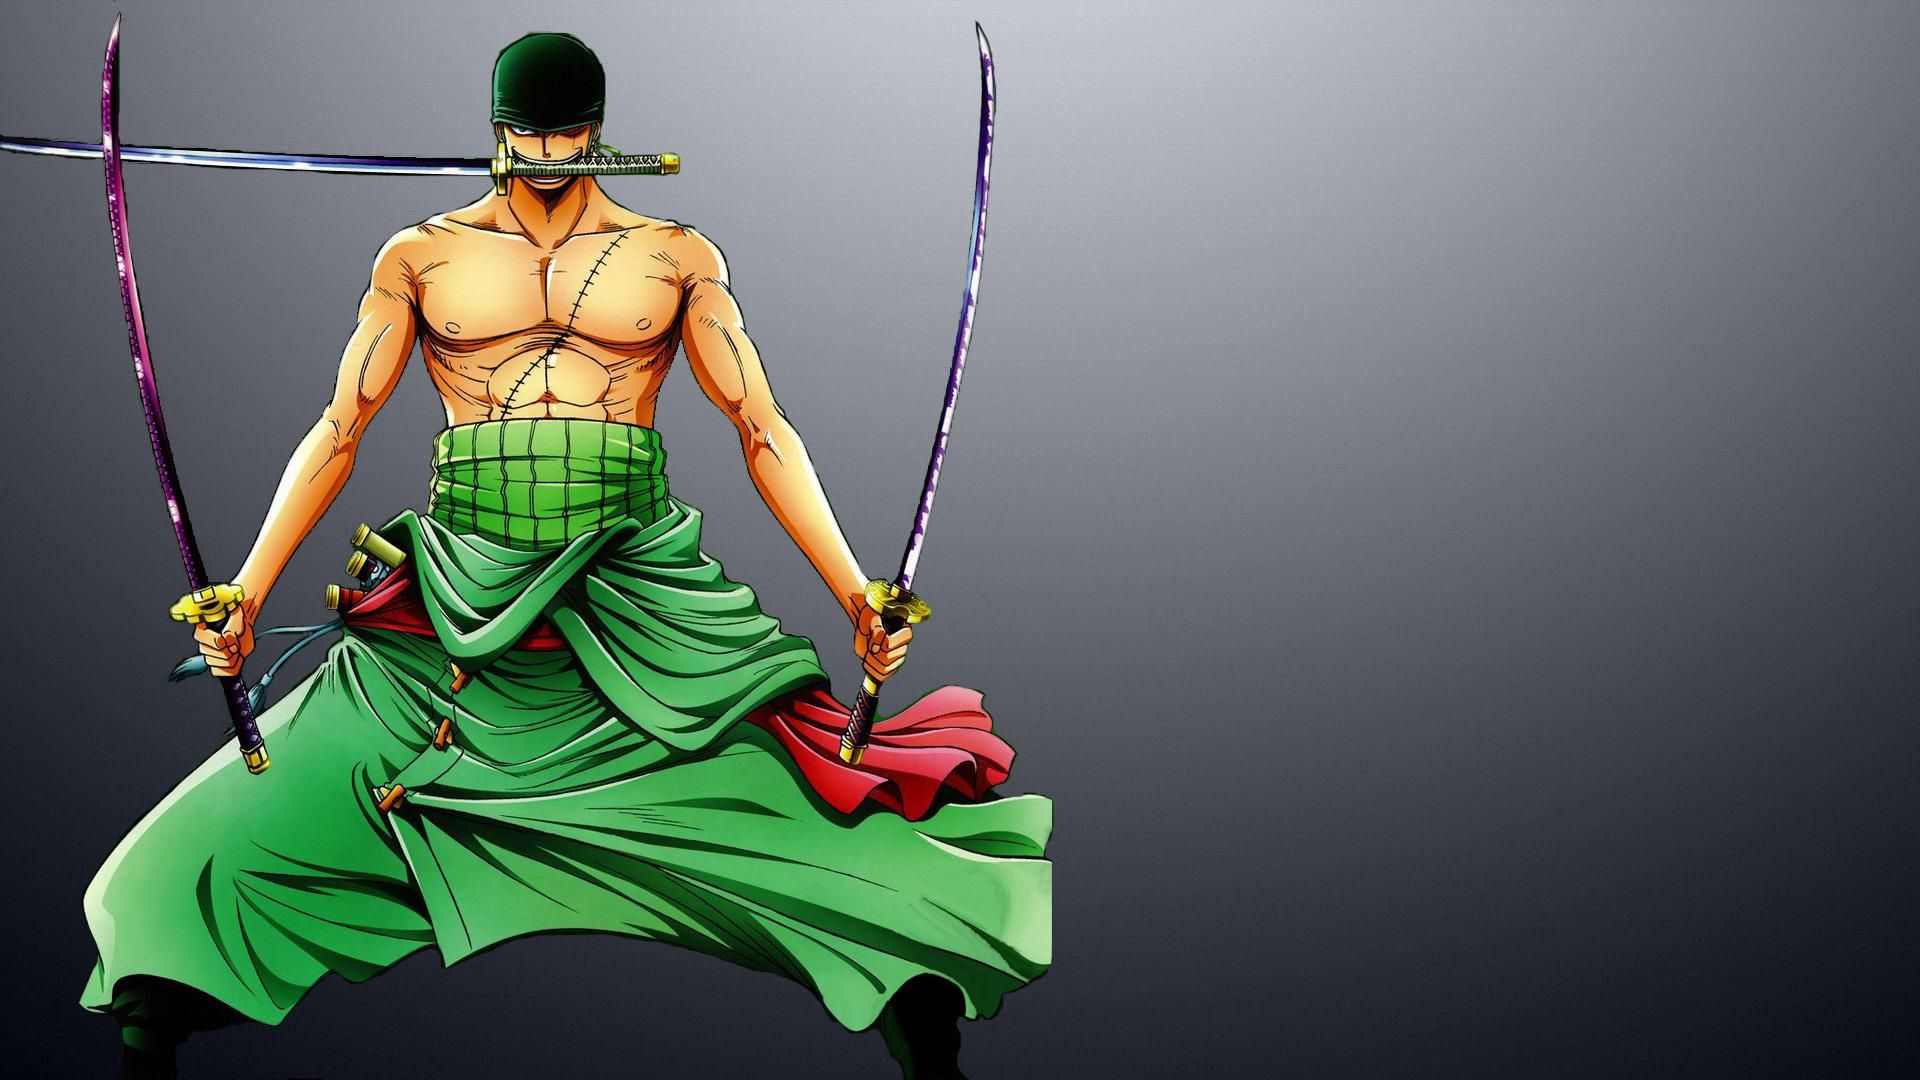 HD Roronoa Zoro with swords Piece Wallpaper. Download Free